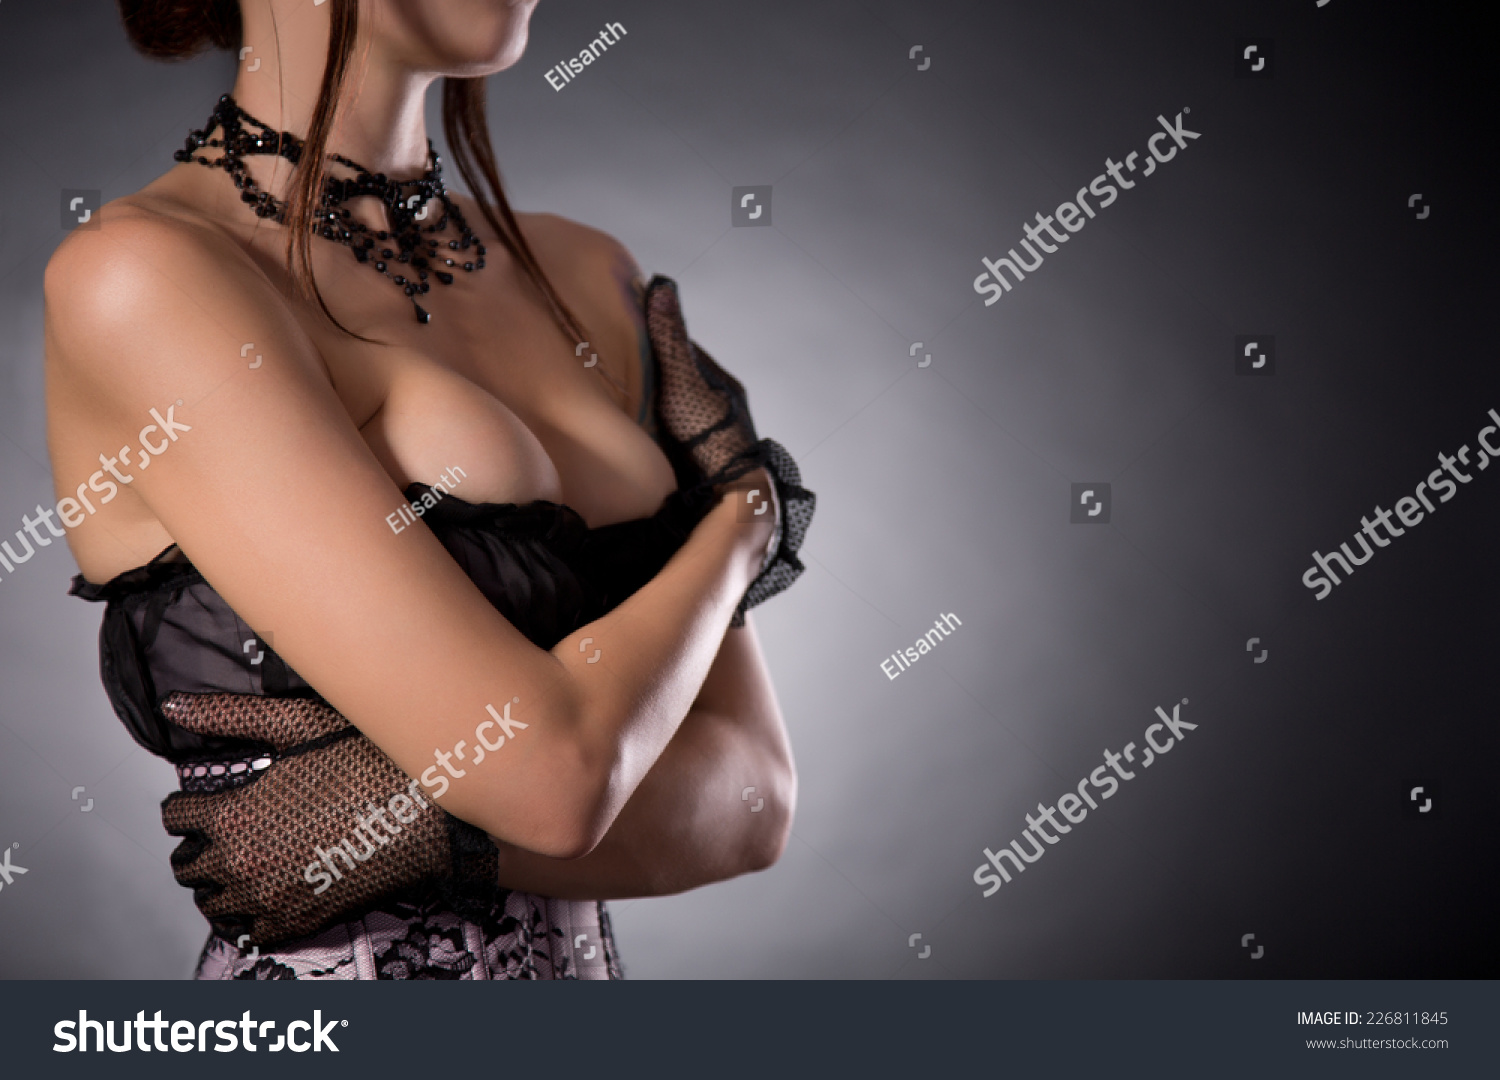 Bondage embracing in woman